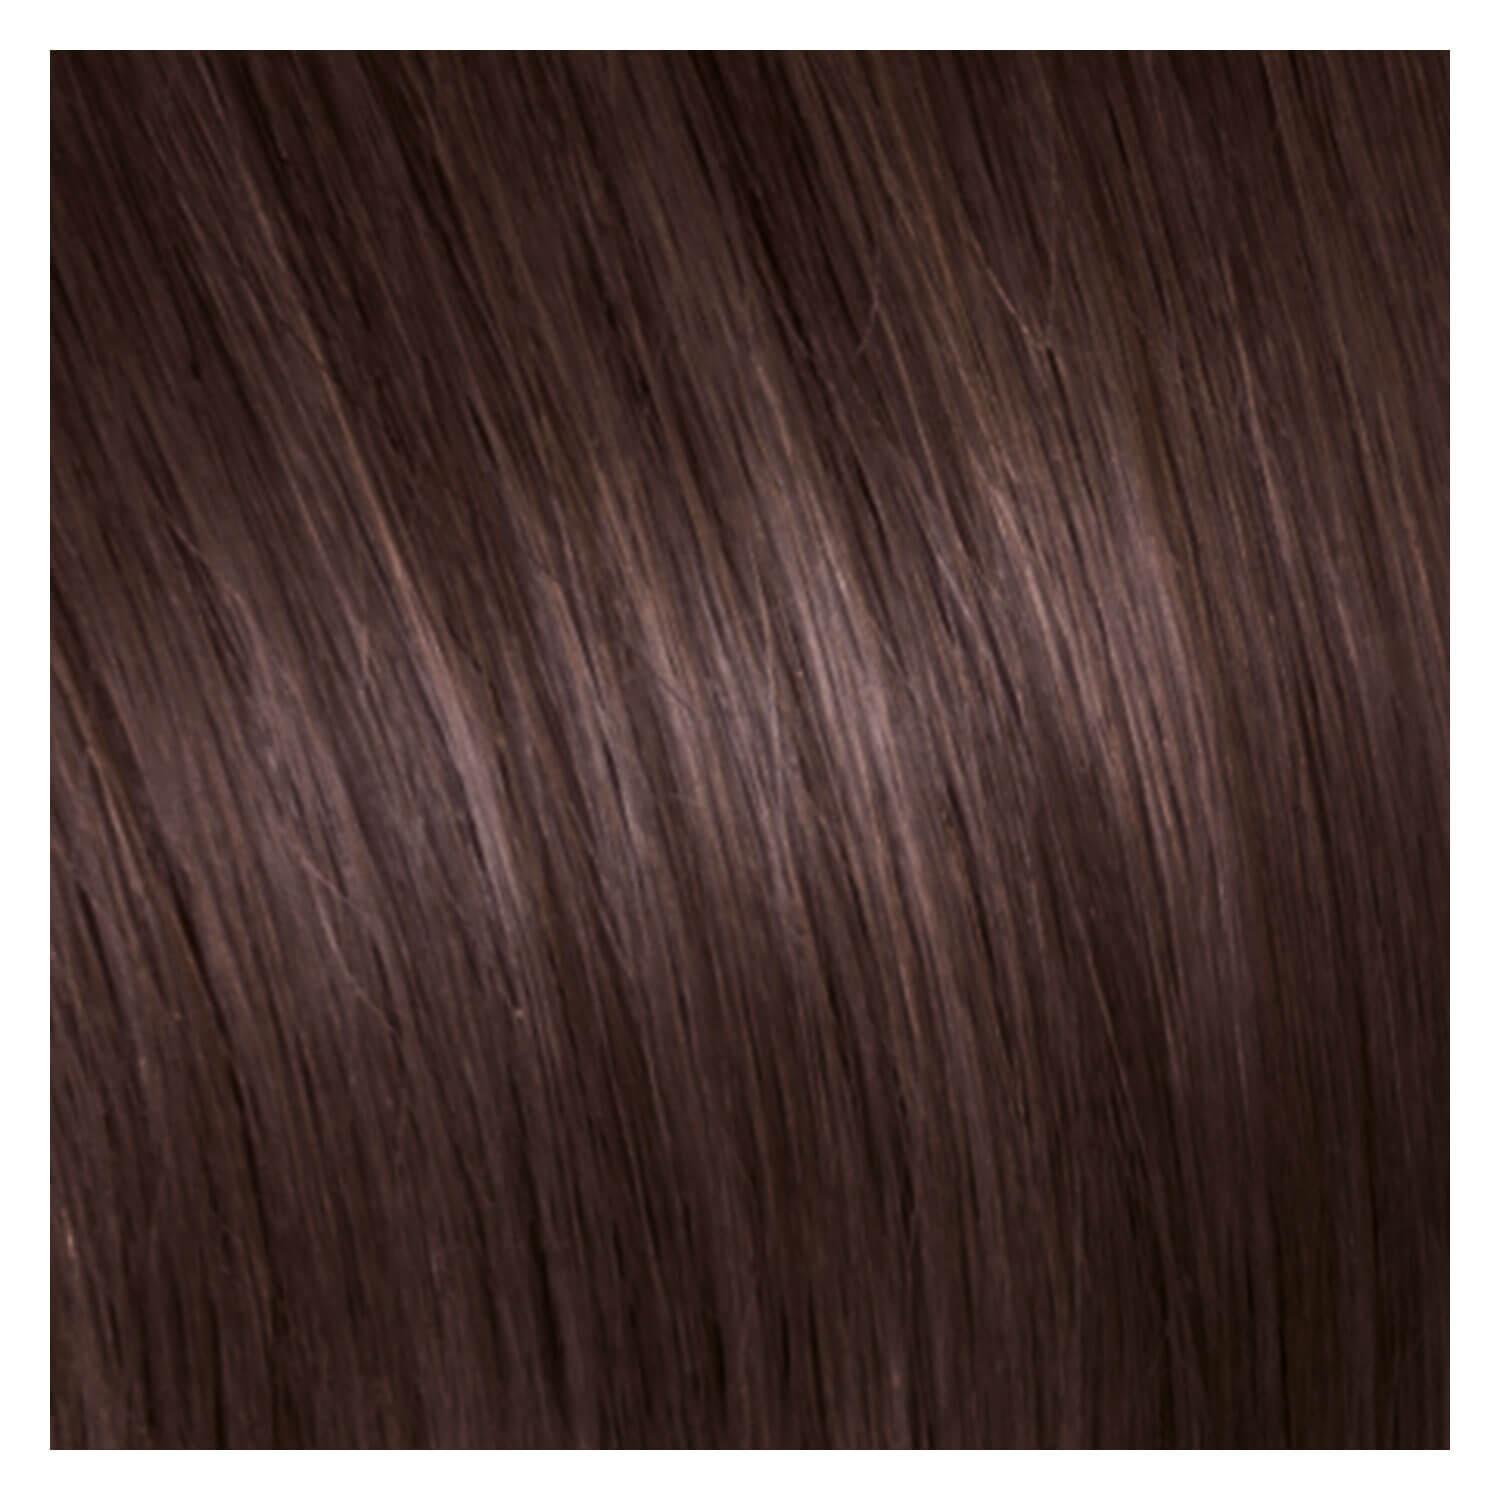 SHE Bonding-System Hair Extensions Wavy - 6 Marron Clair 55/60cm